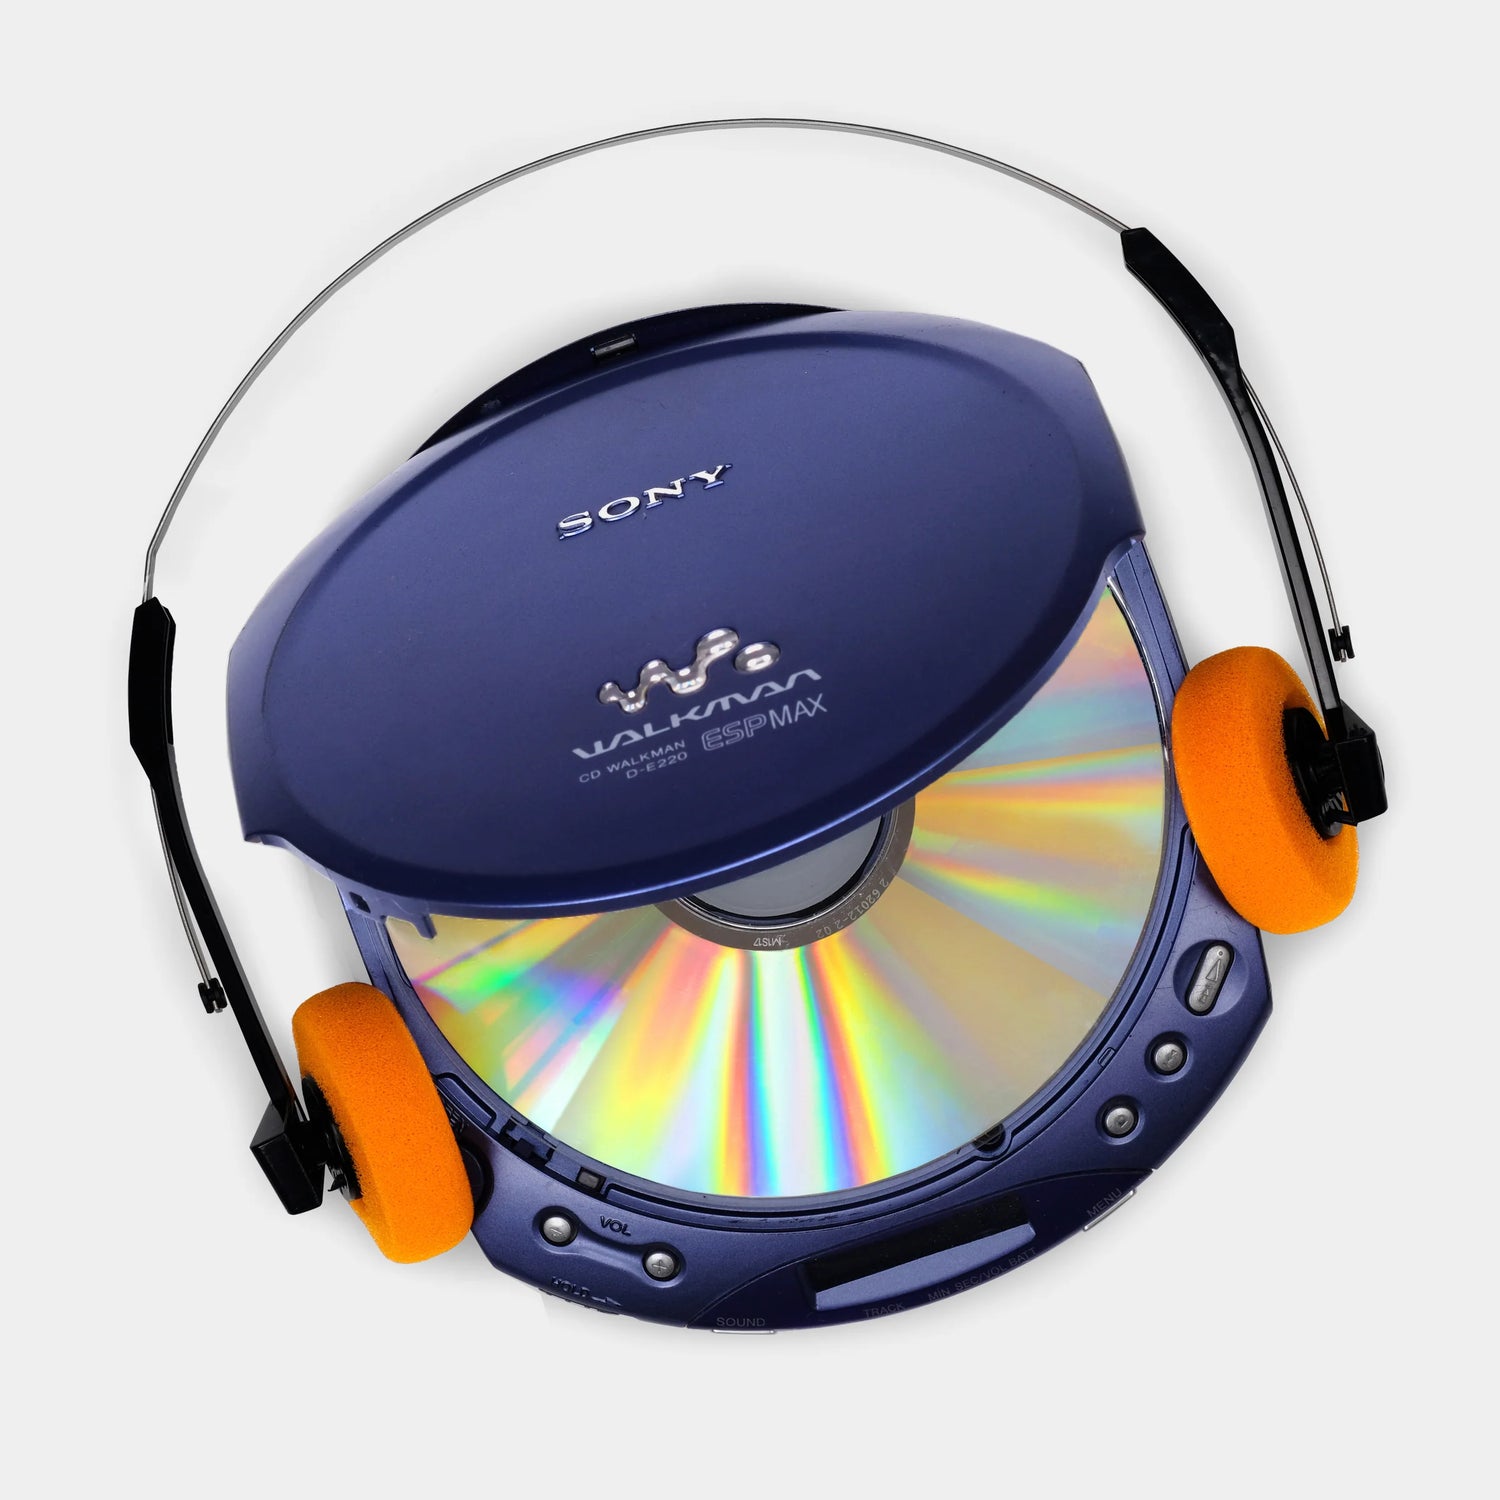 SONY CD WALKMAN D-E220 (Lavender Blue)